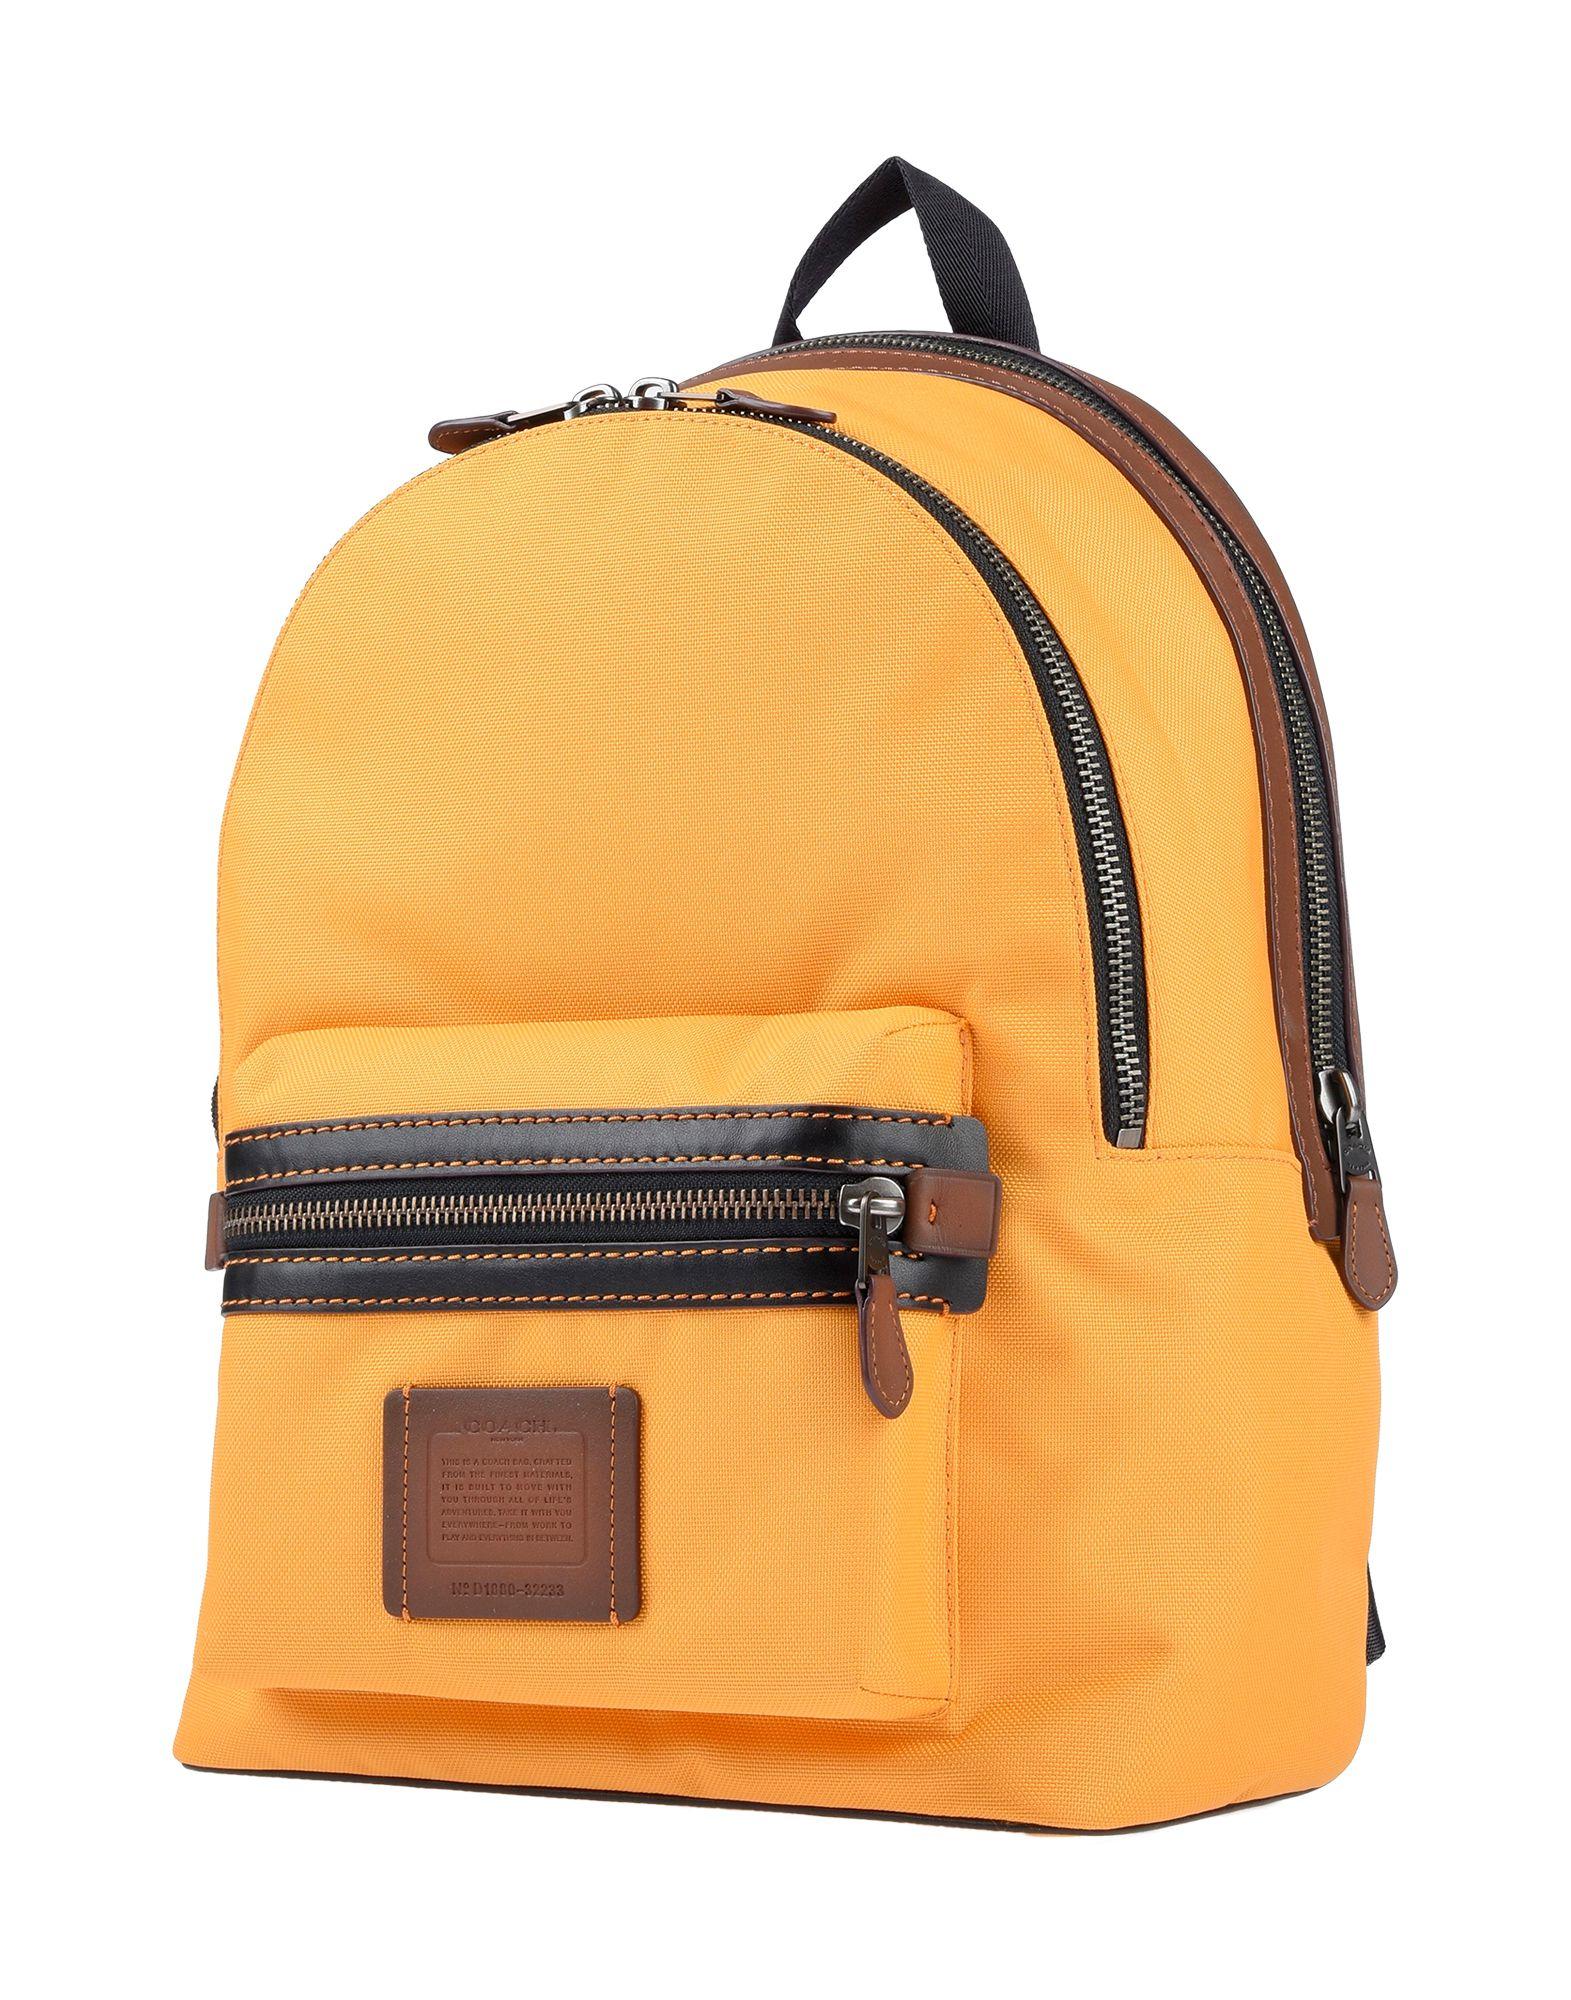 COACH Leather Backpacks & Fanny Packs in Orange for Men - Lyst